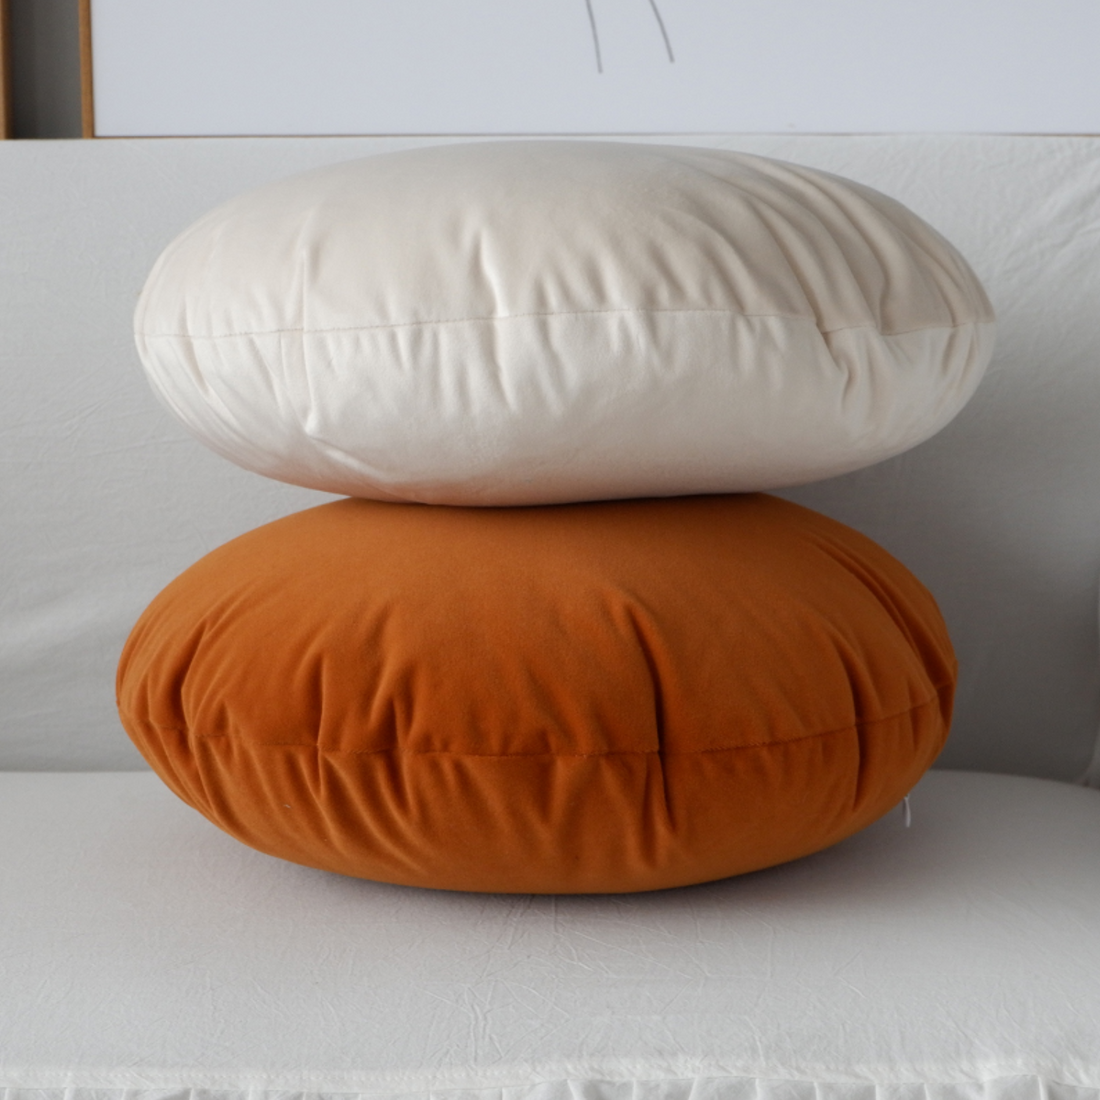 Velvet Round Cushion